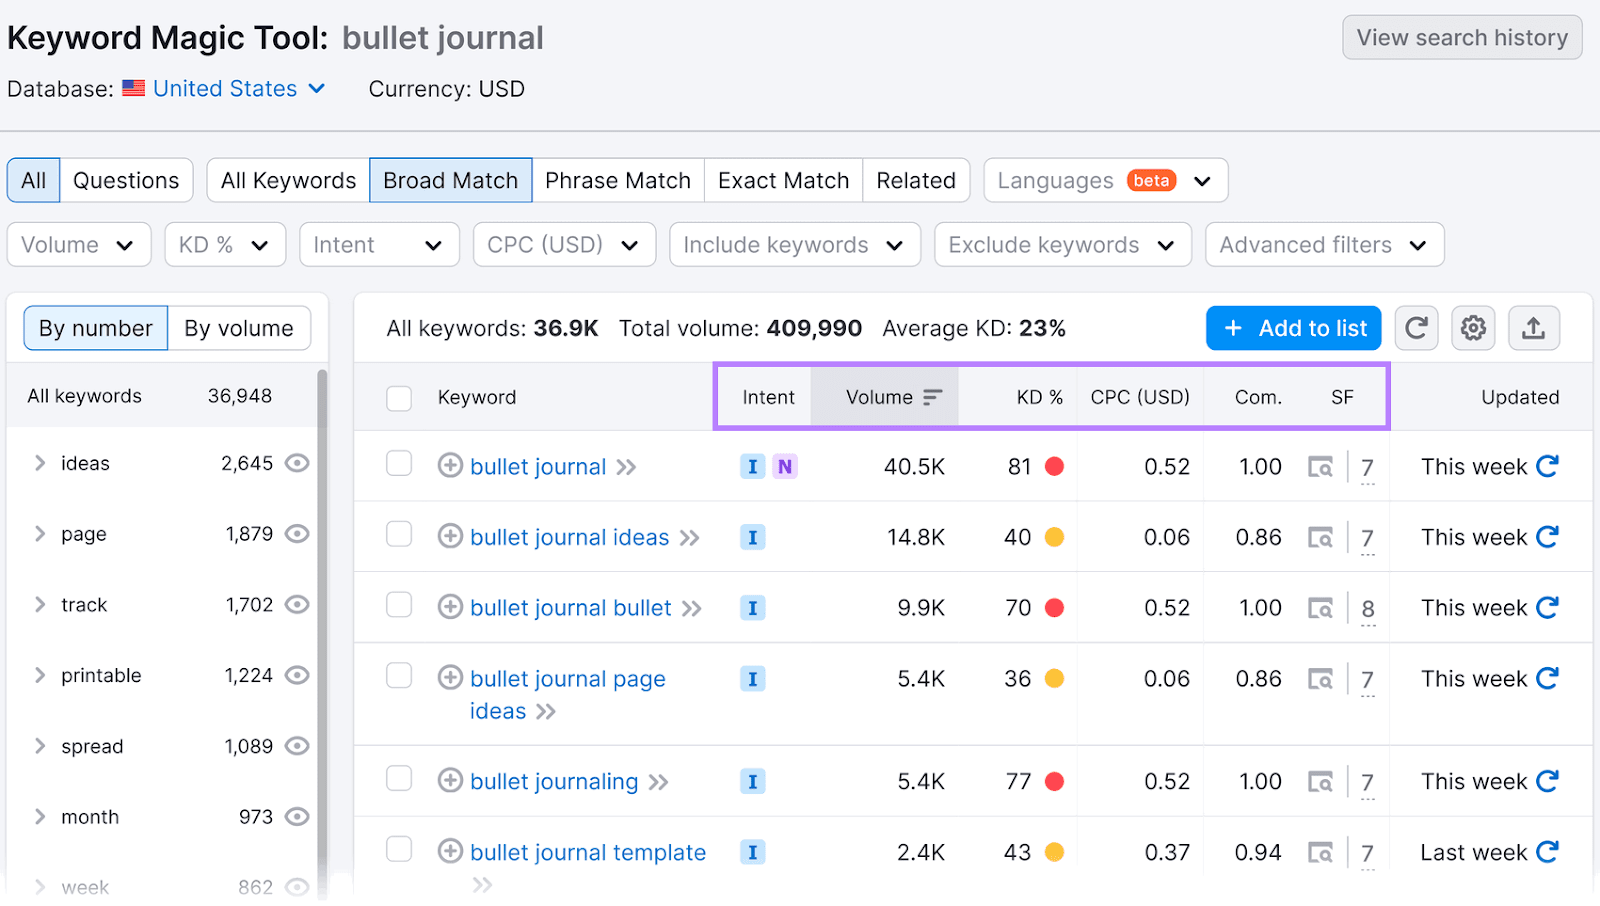 Keyword Magic Tool results for “bullet journal.